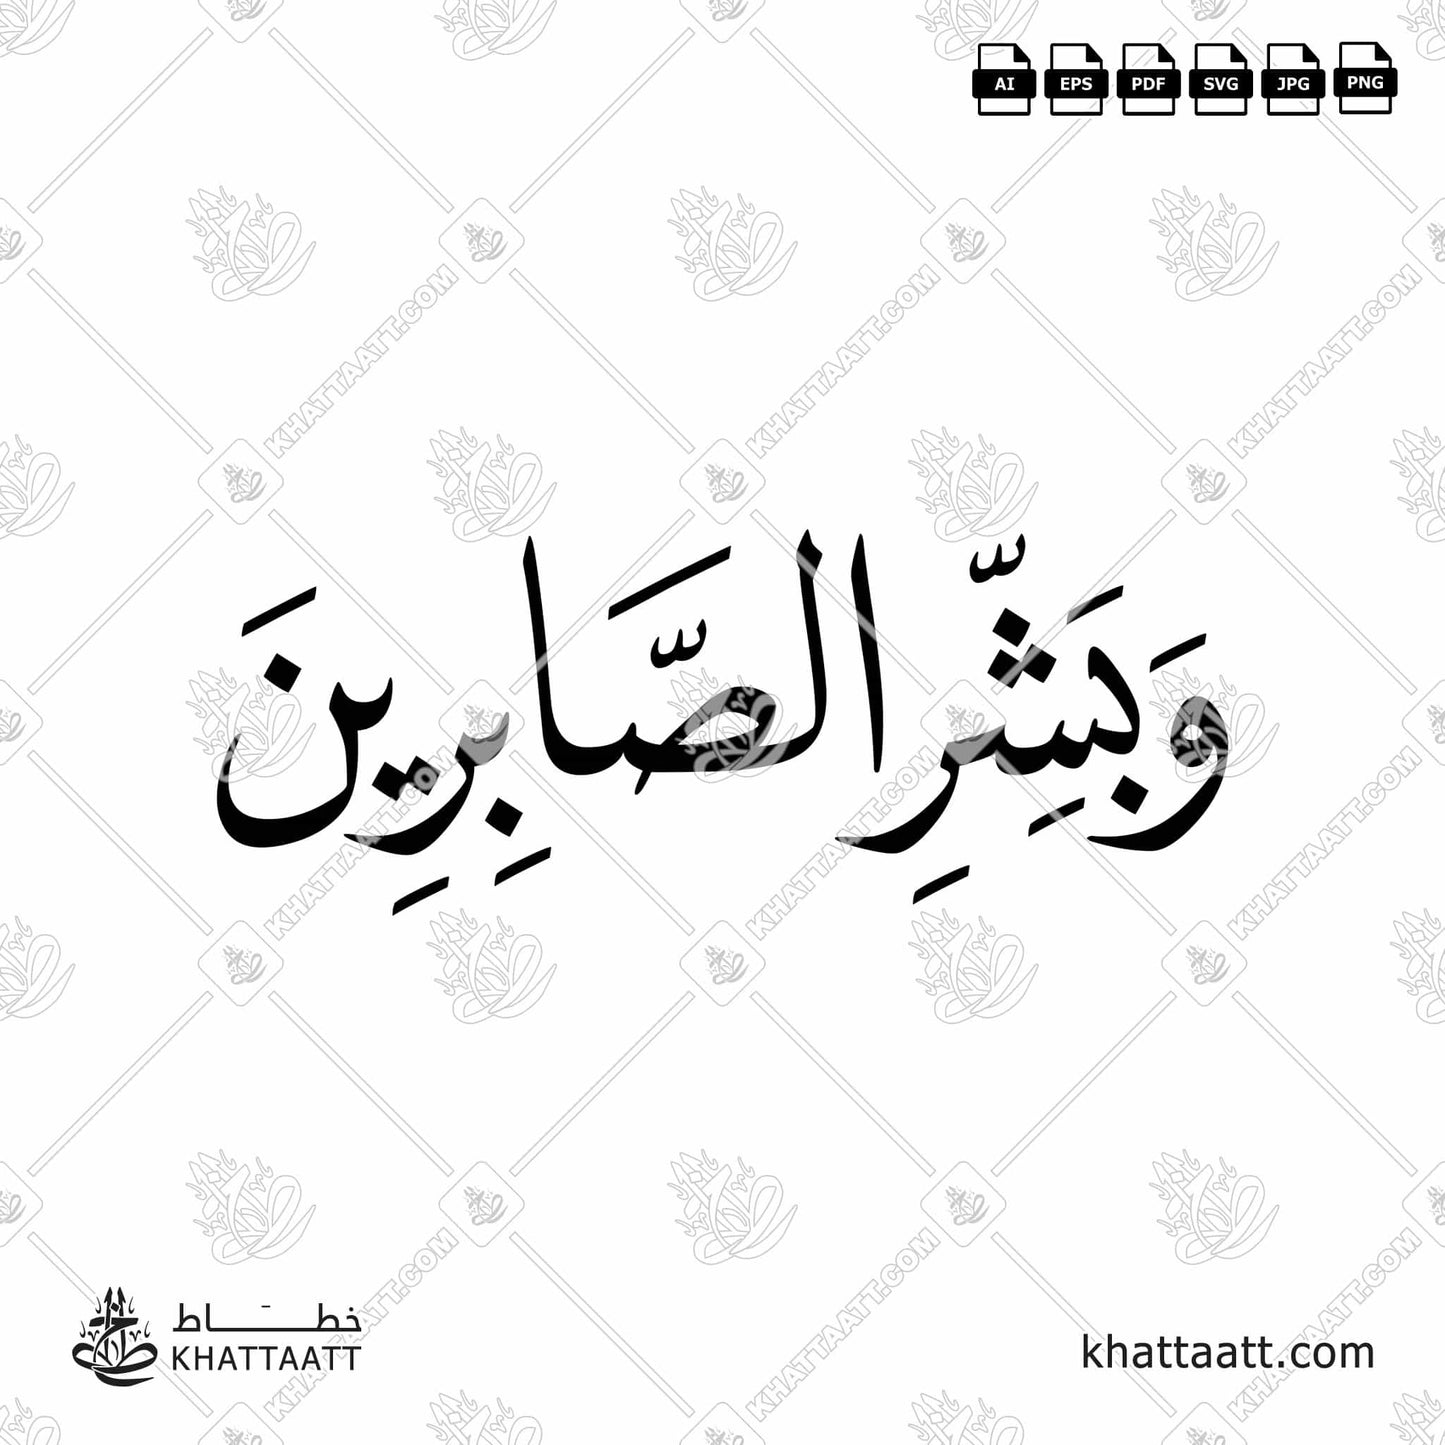 Download Arabic calligraphy تحميل مخطوطة خط عربي of وبشر الصابرين (N021) Naskh - خط النسخ in vector فيكتور and png